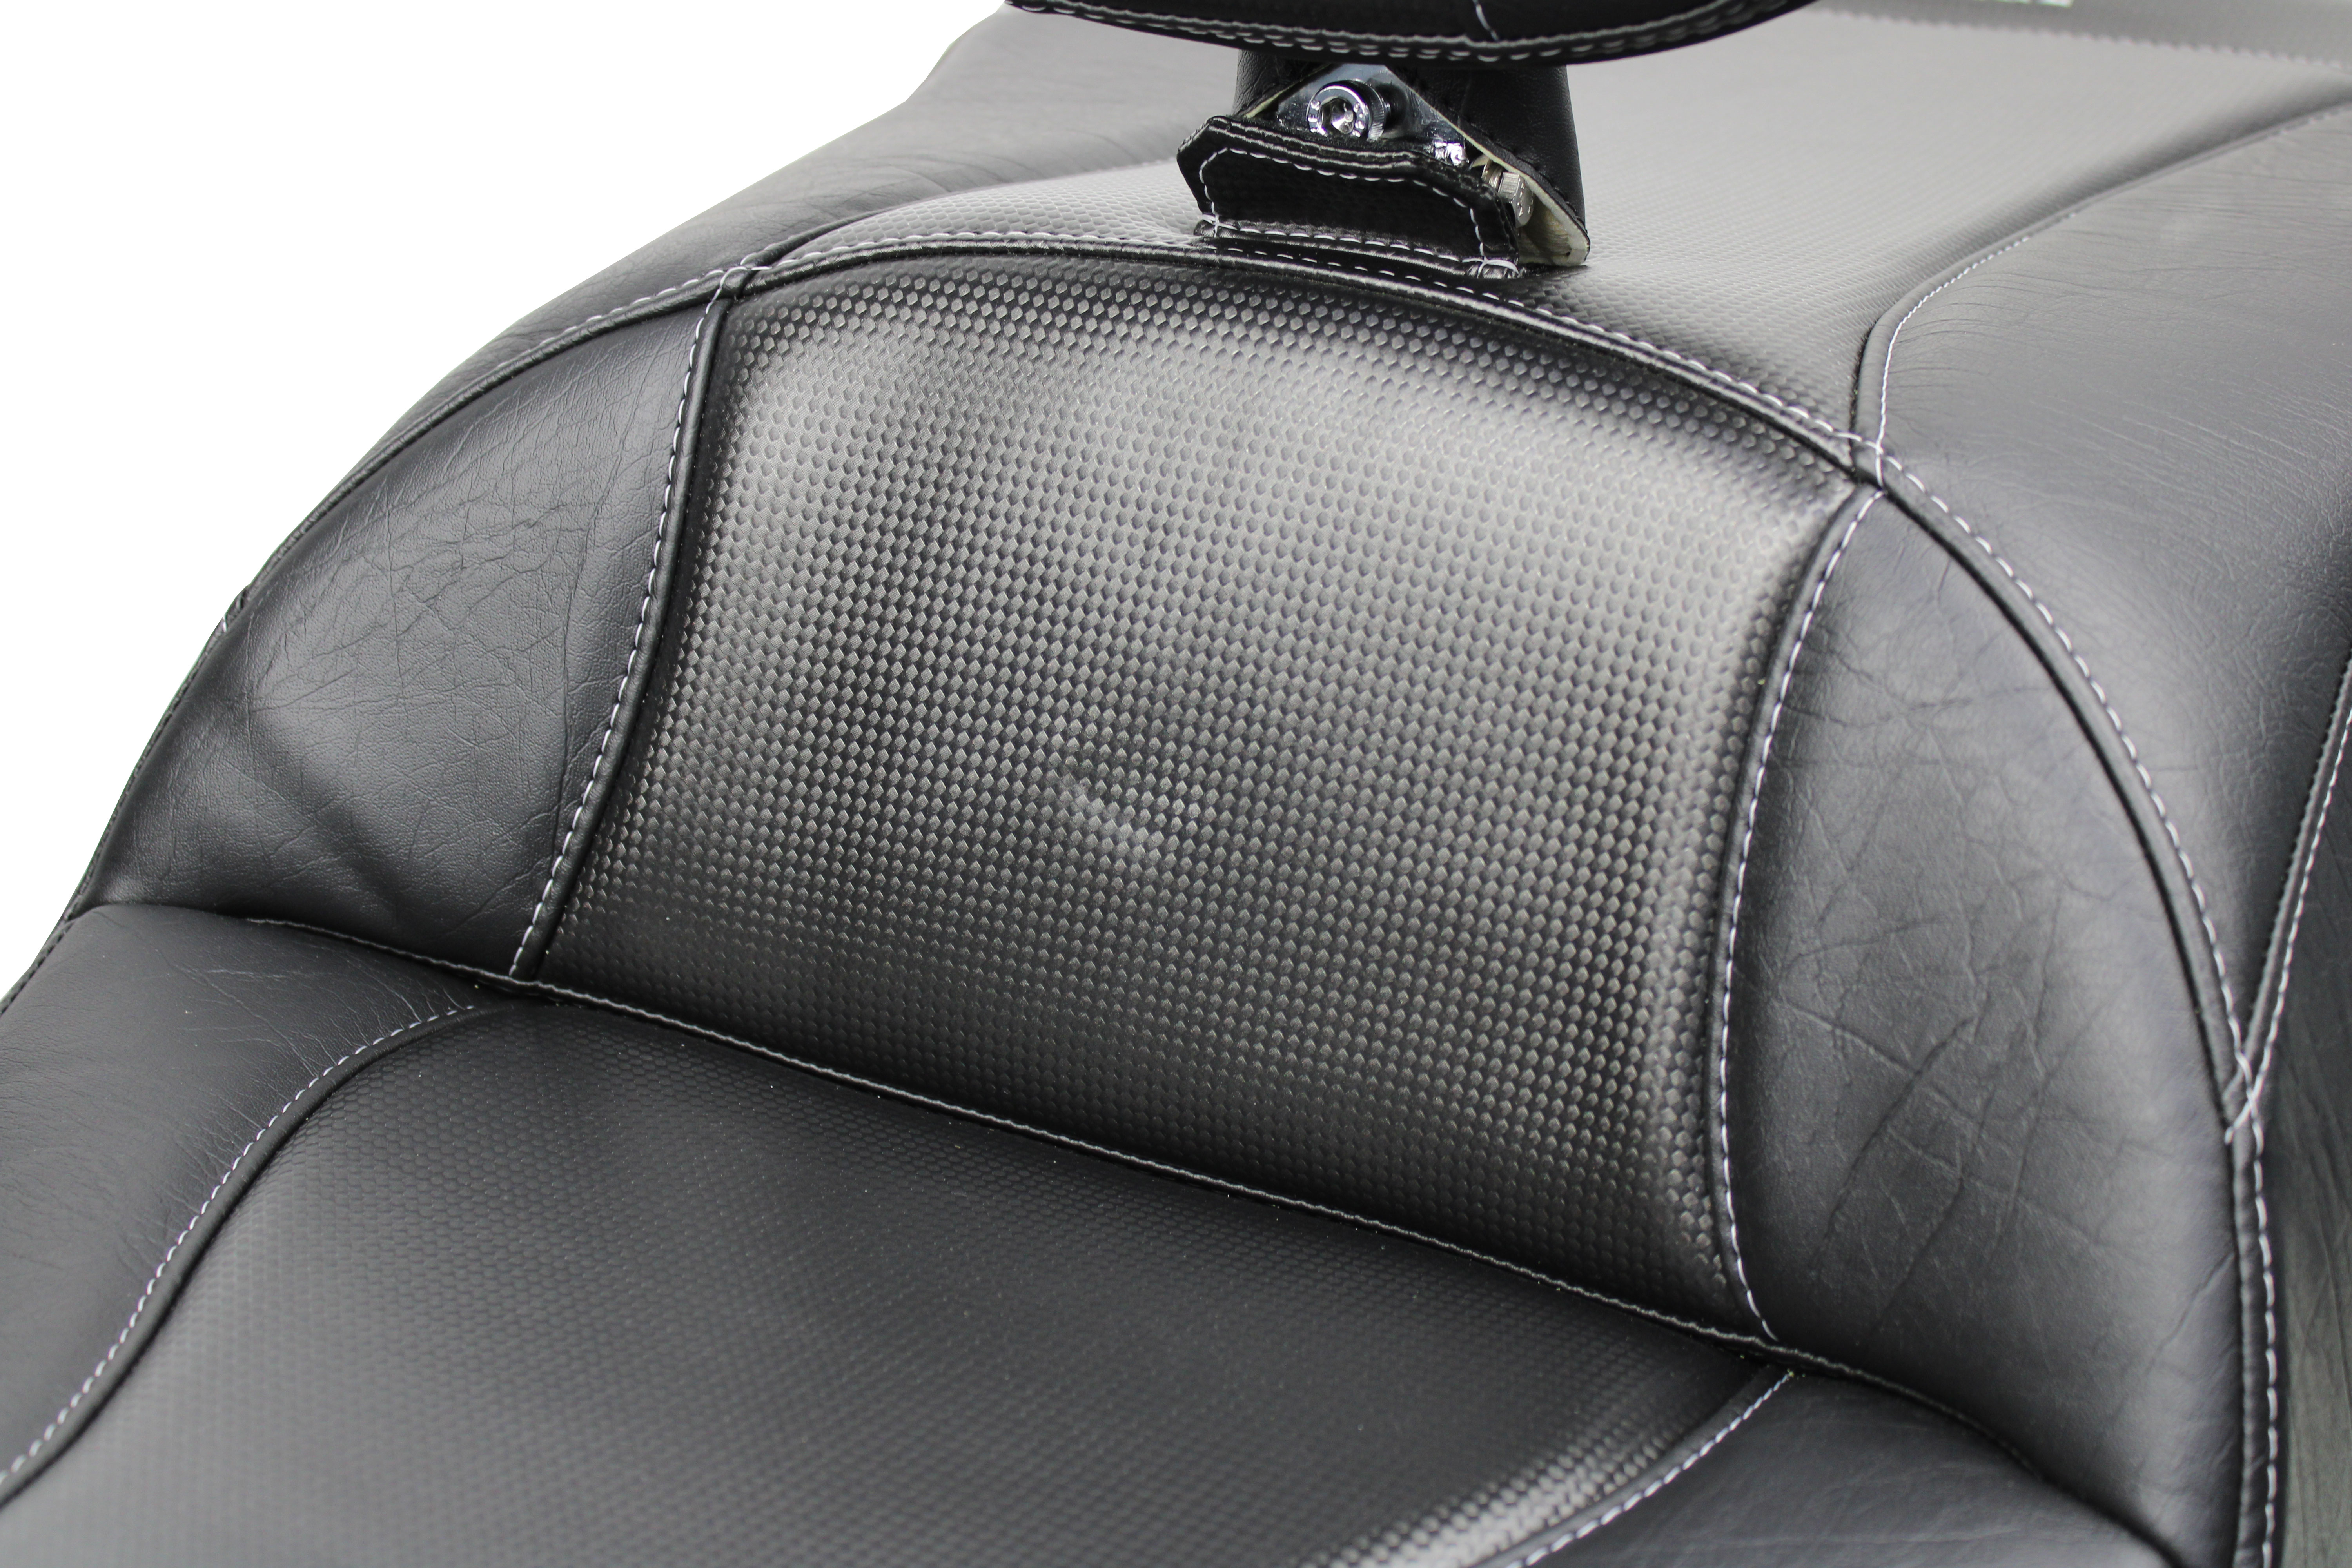 Goldwing Tour Seat, Driver Backrest and Ultimate Passenger Backrest - Apex Carbon Fiber Inlay (2018 - 2020)